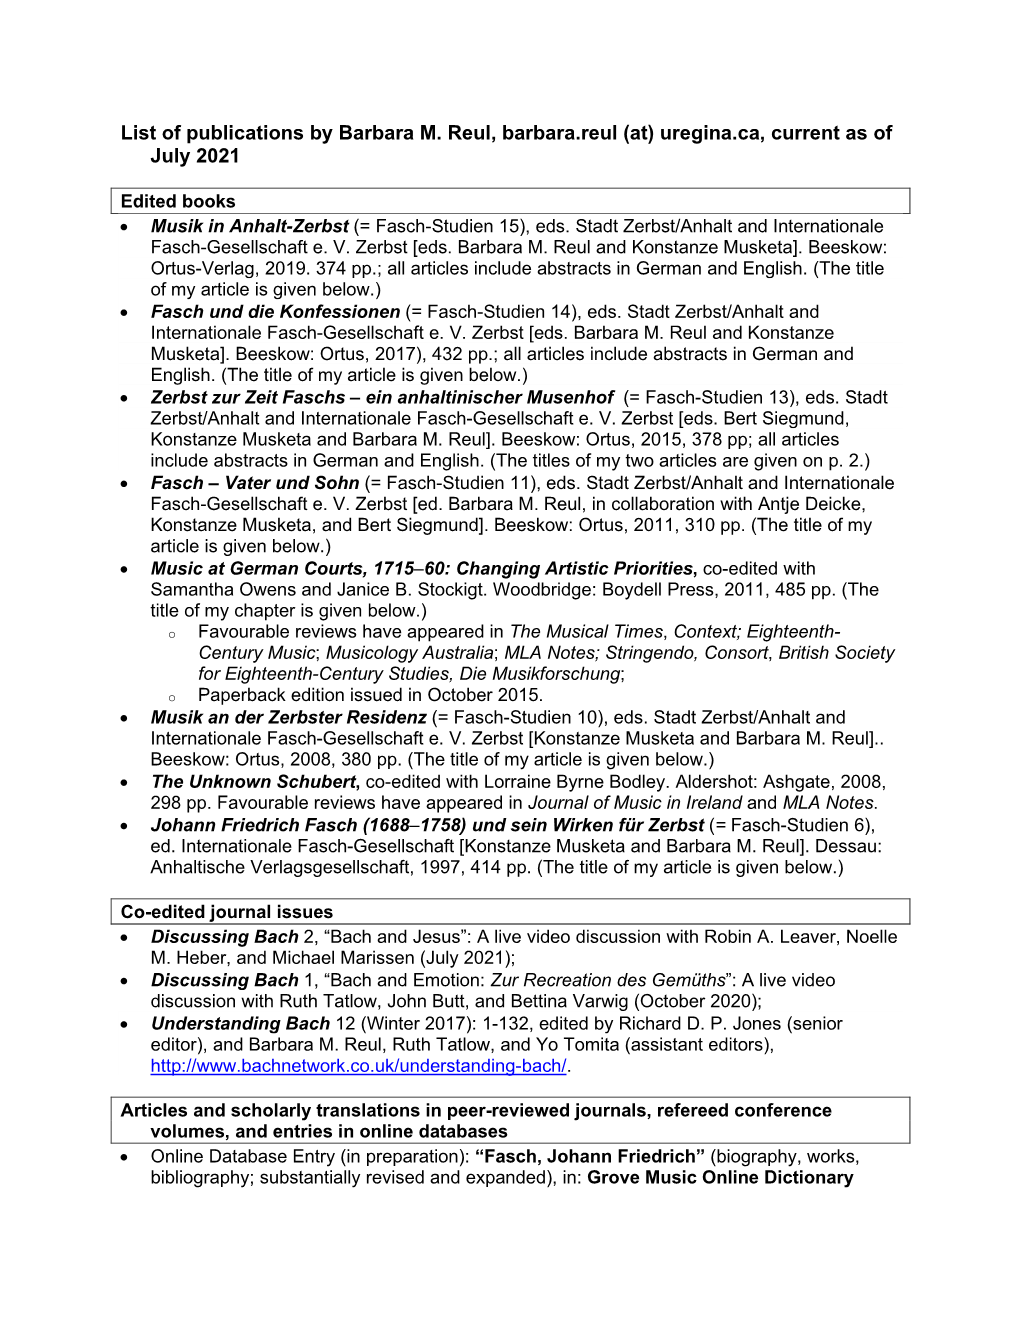 List of Publications by Barbara M. Reul, Barbara.Reul (At) Uregina.Ca, Current As of July 2021